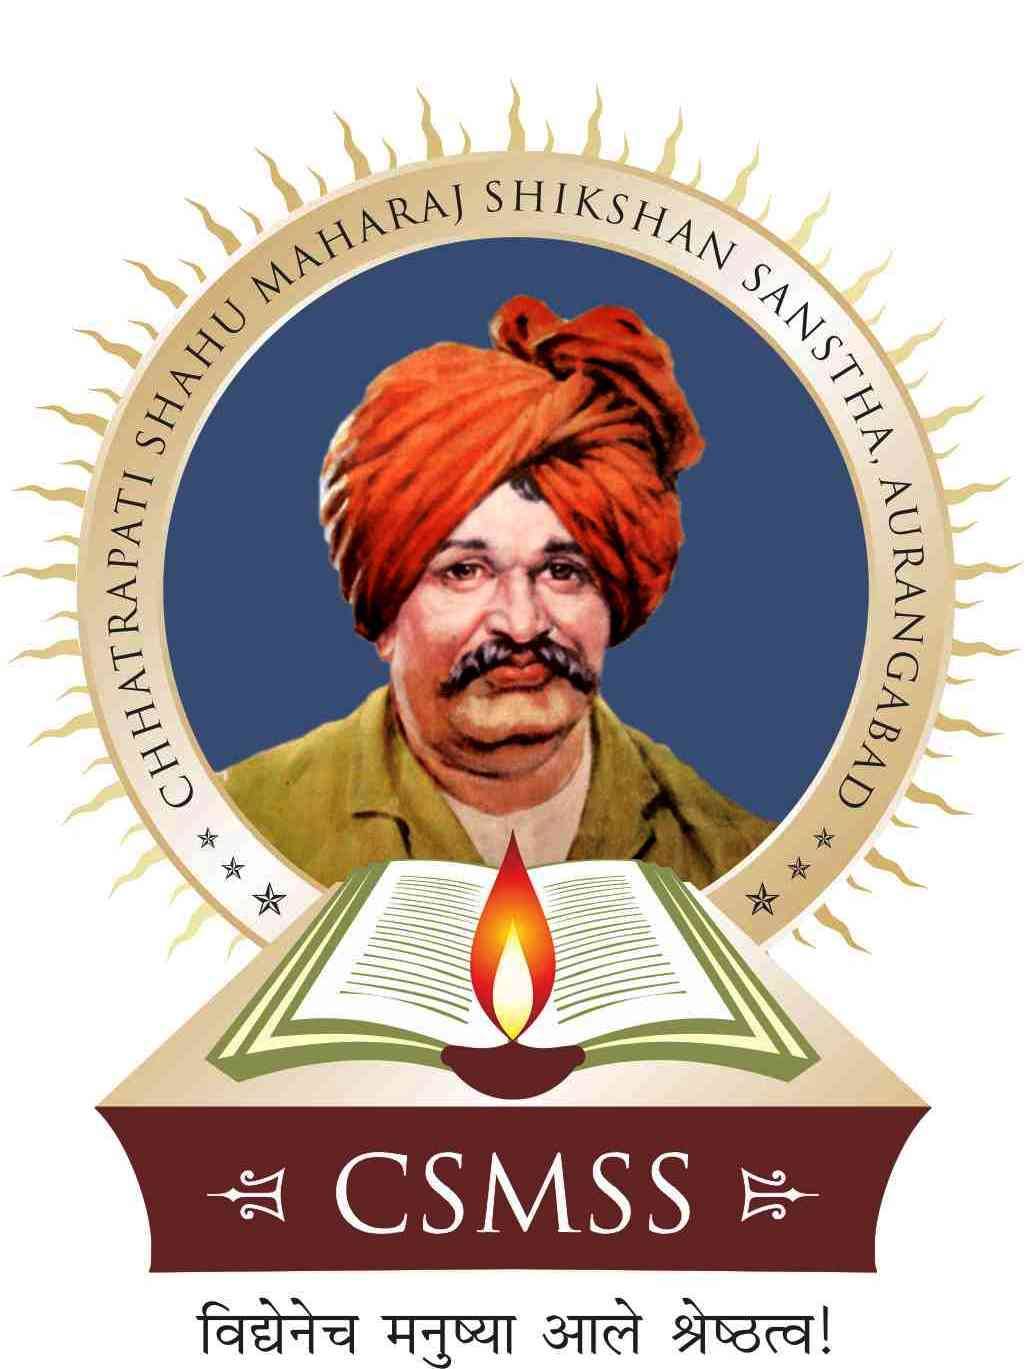 CSMSS, Chh. Shahu College Of Engineering - Logo